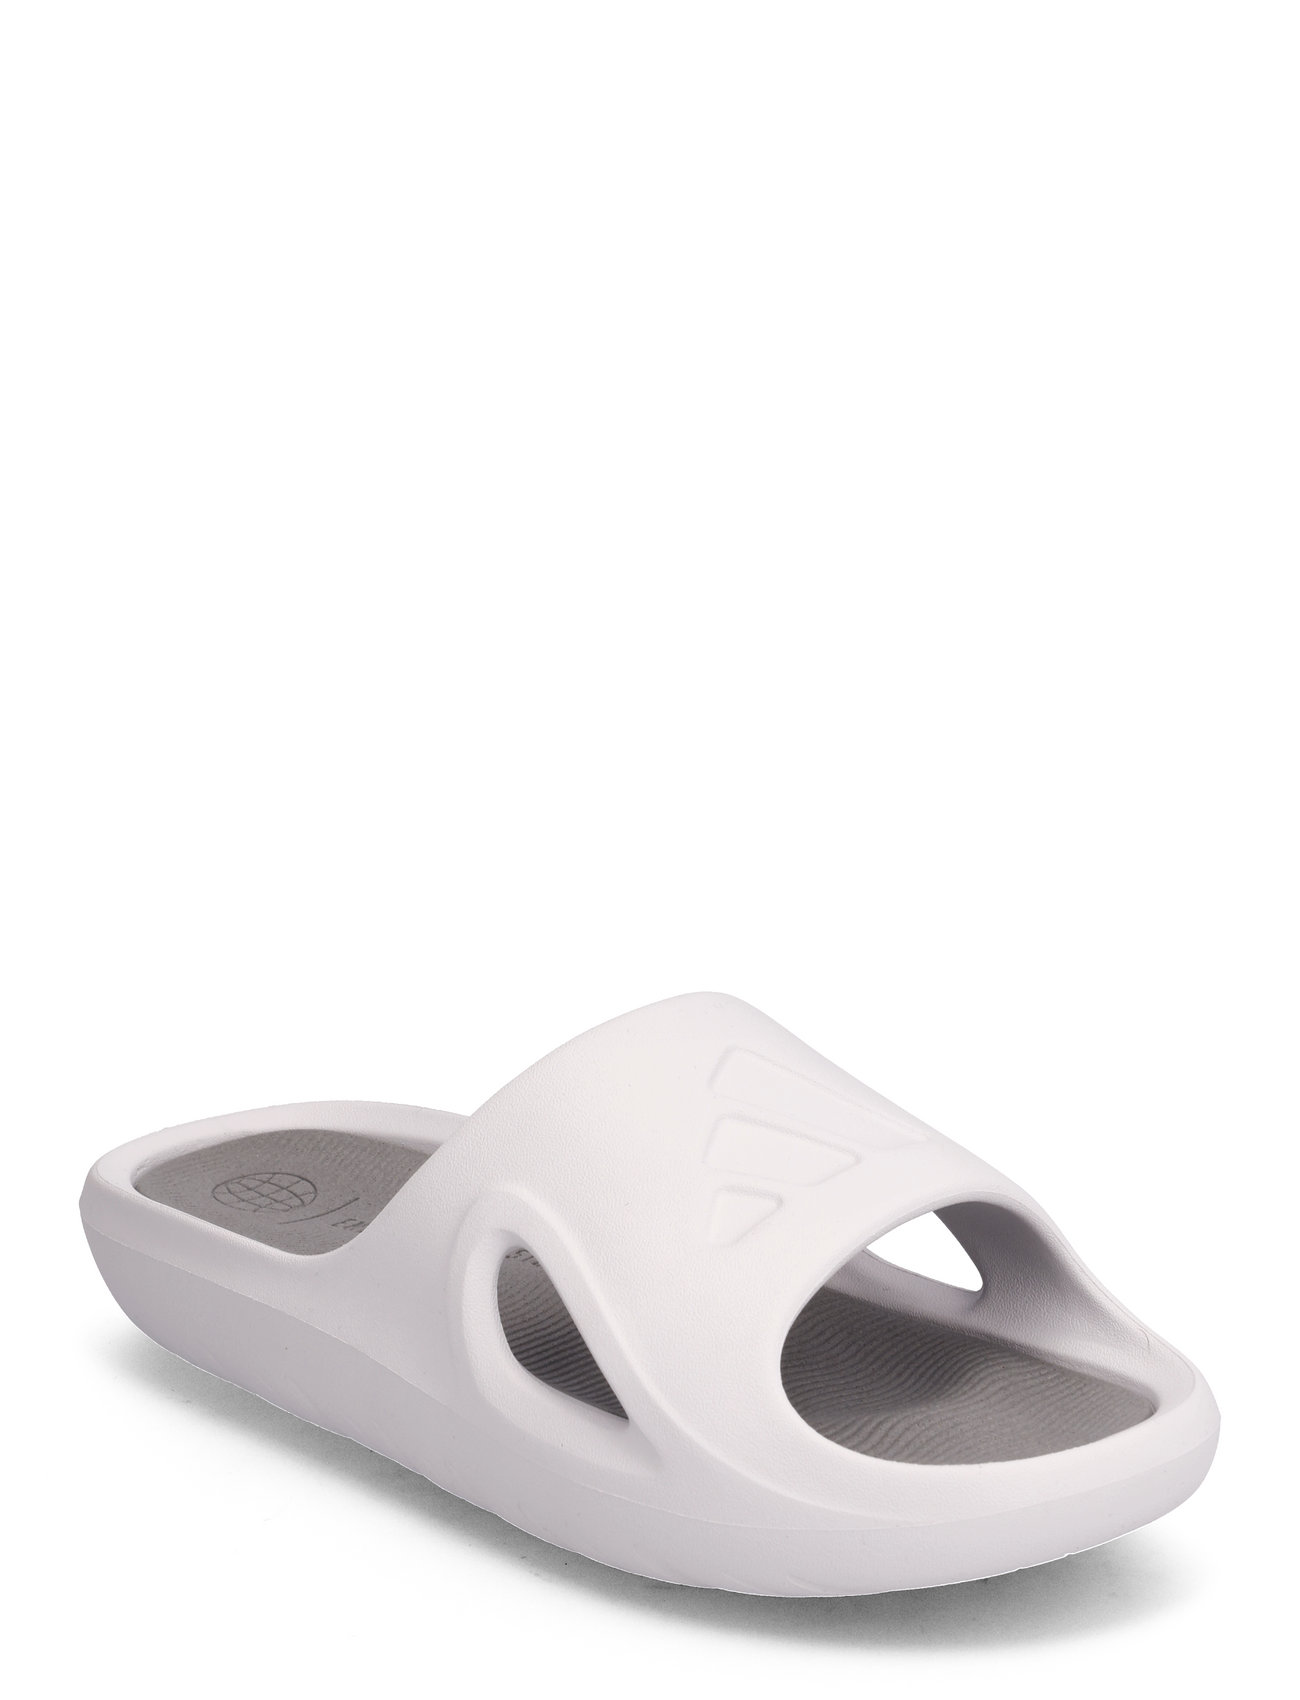 Adicane Slides Sport Summer Shoes Sandals Pool Sliders Grey Adidas Sportswear